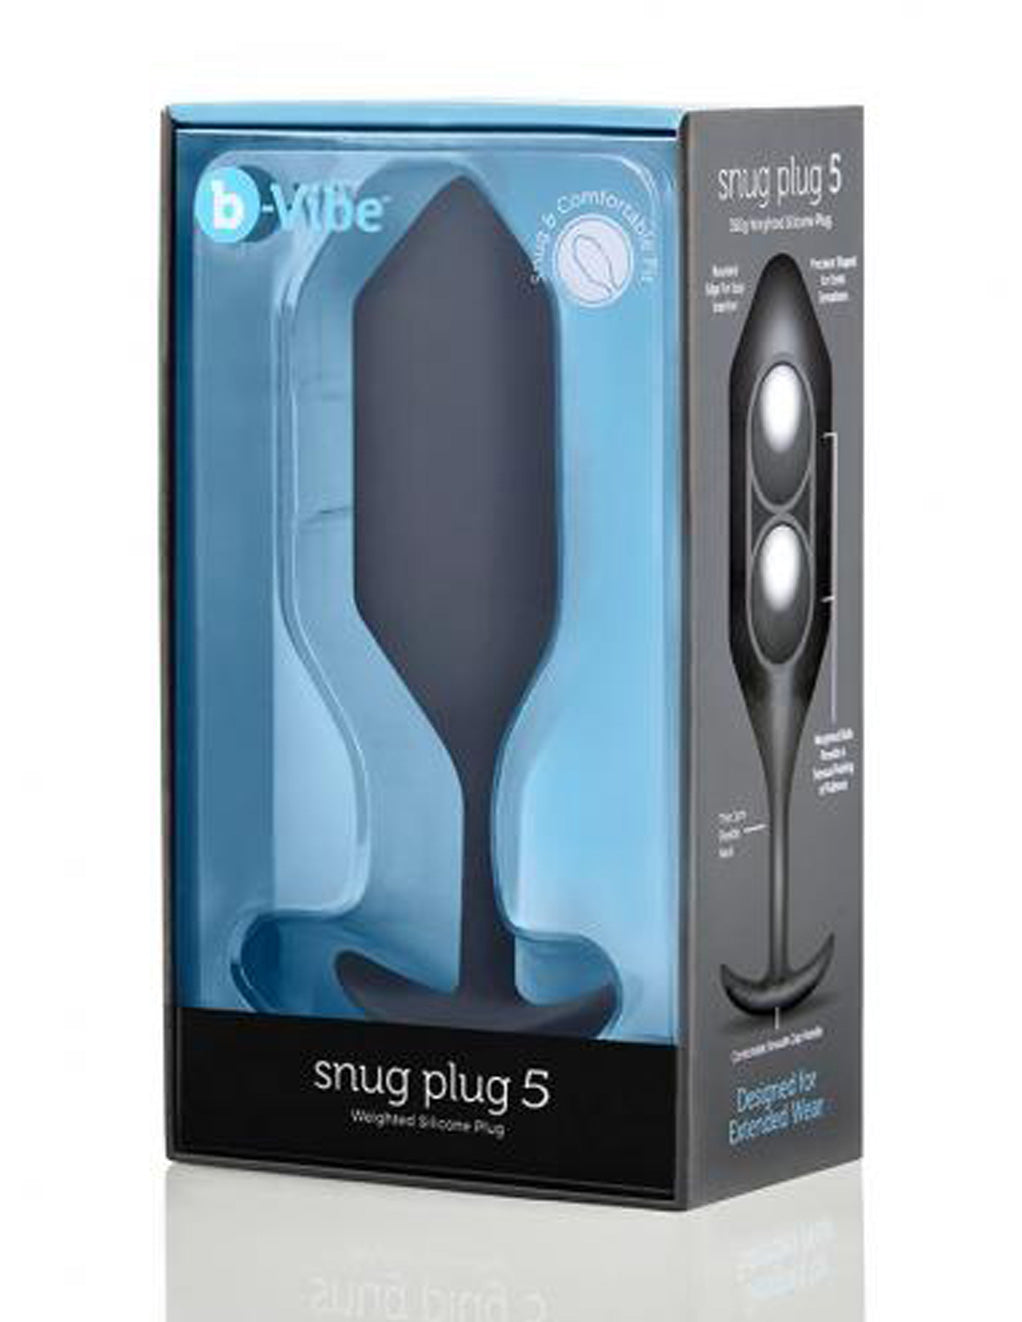 BVibe Snug Plug 5 Box Front